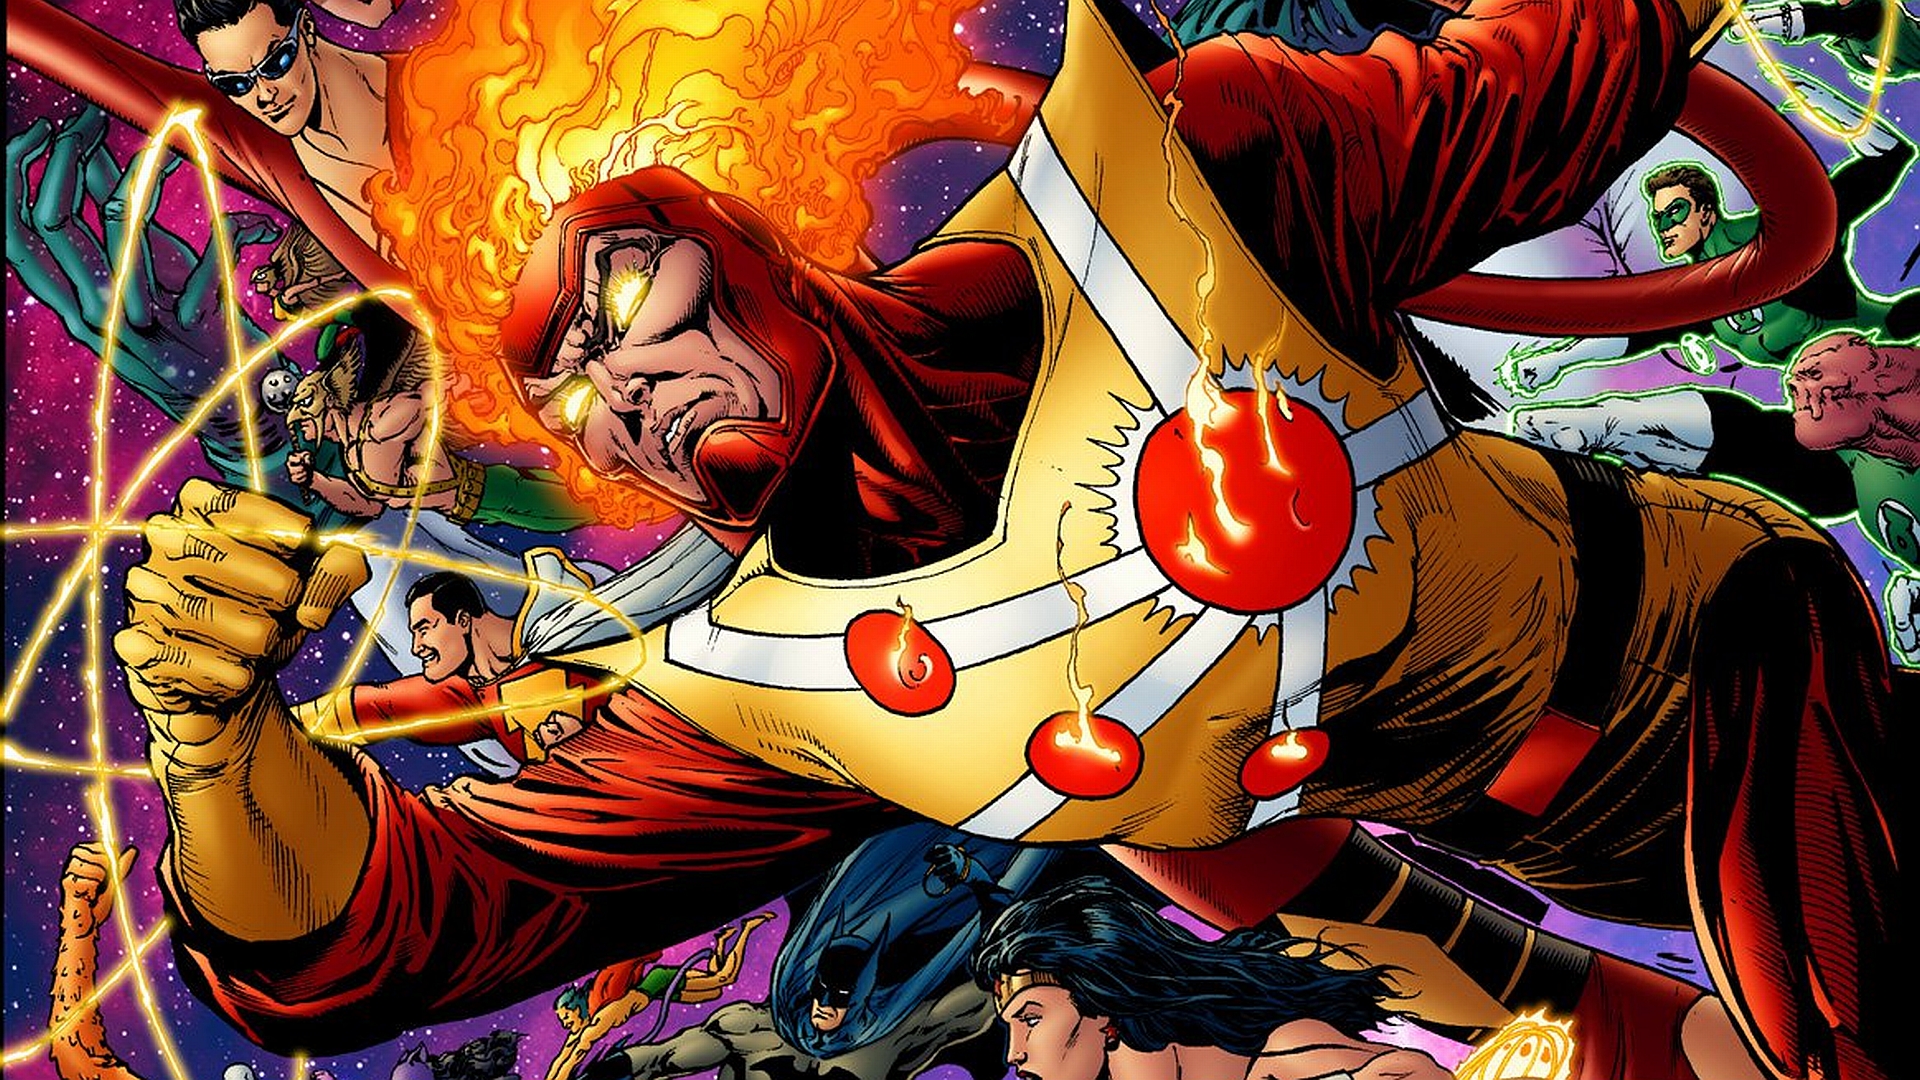 DC Comics superheroes like Firestorm, Green Lantern, Wonder Woman, and more unite in an epic desktop wallpaper.